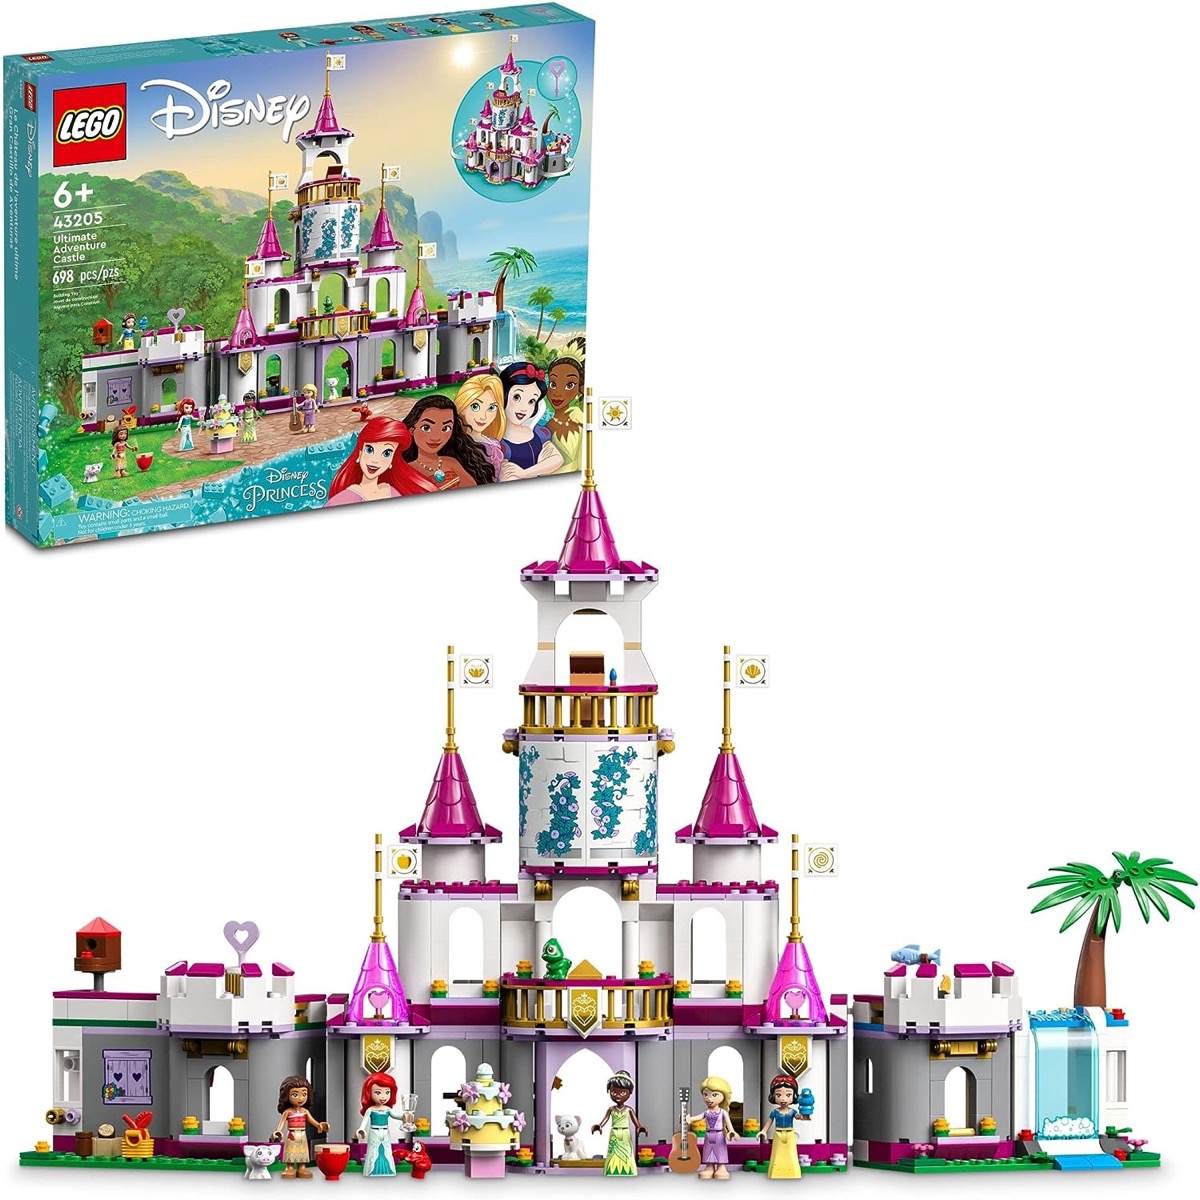 A LEGO castle full of Disney Princess figures 